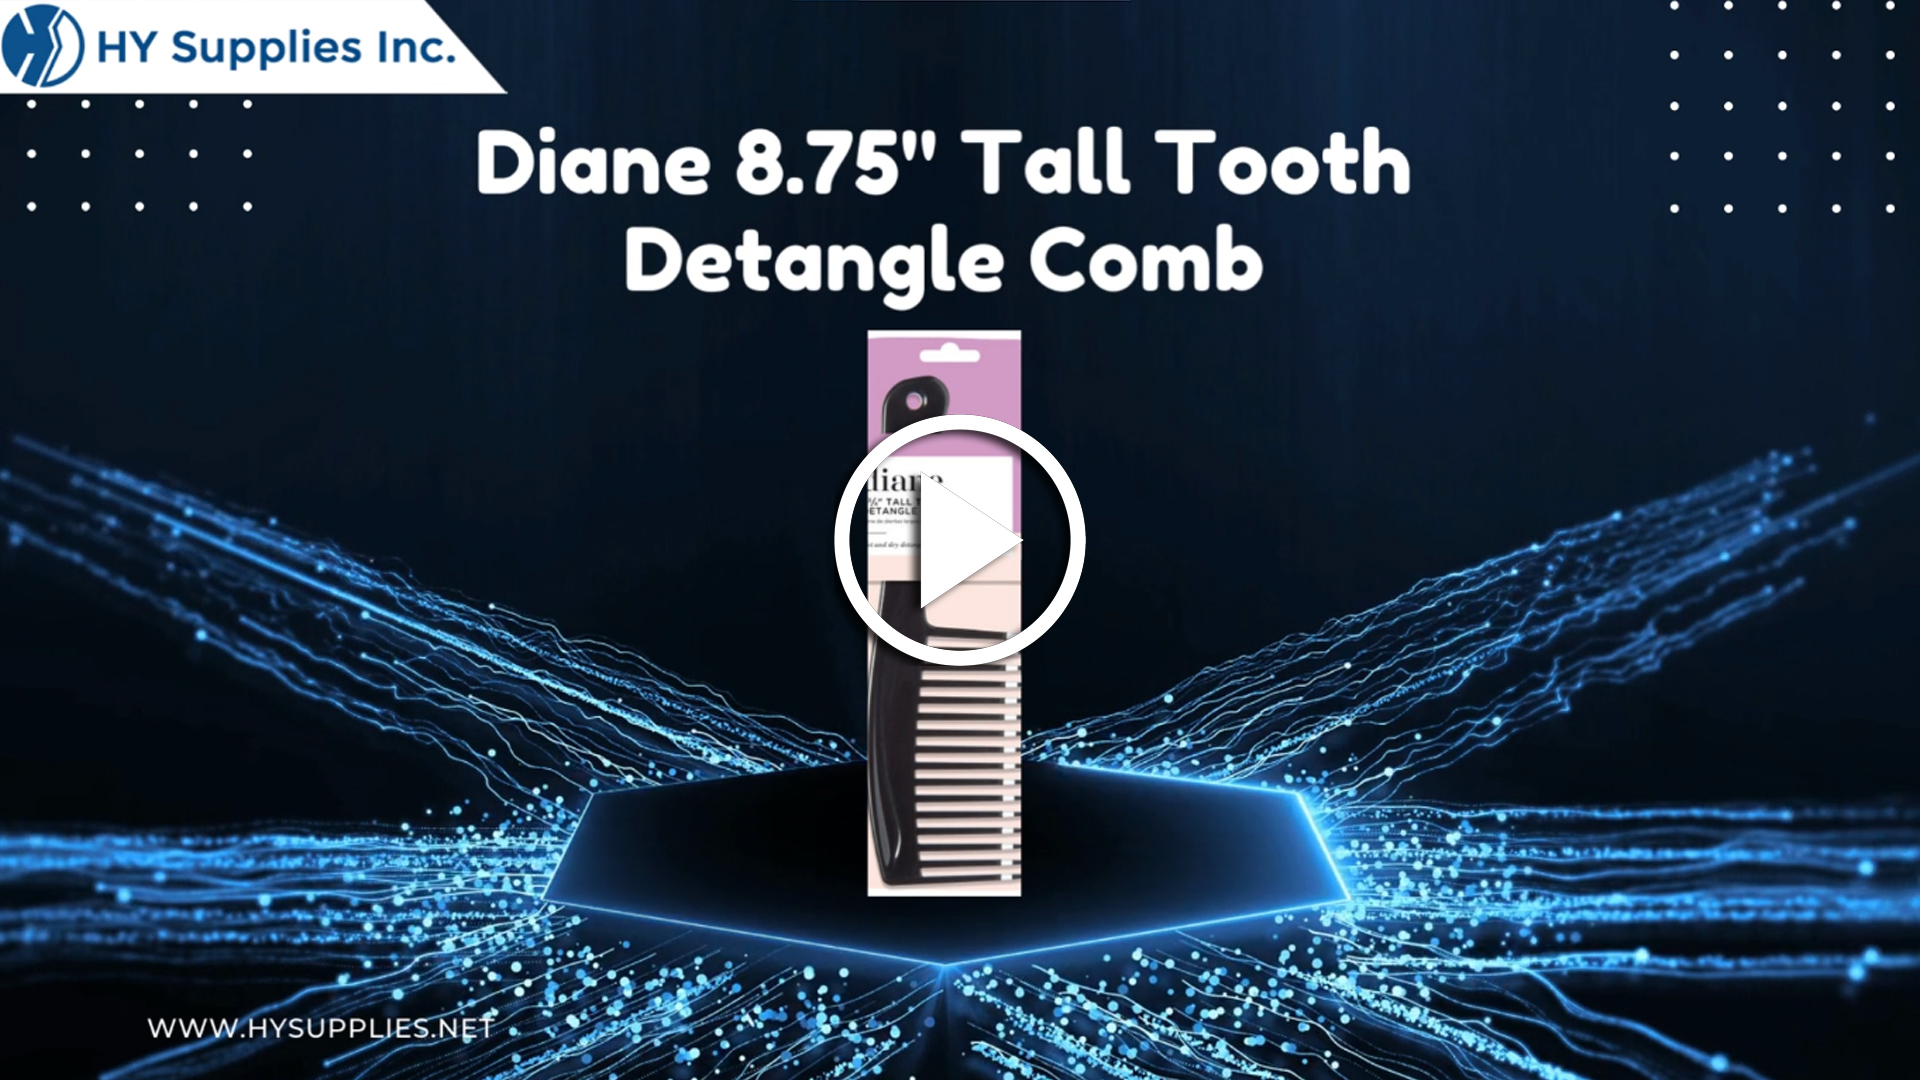 Diane 8.75" Tall Tooth Detangle Comb